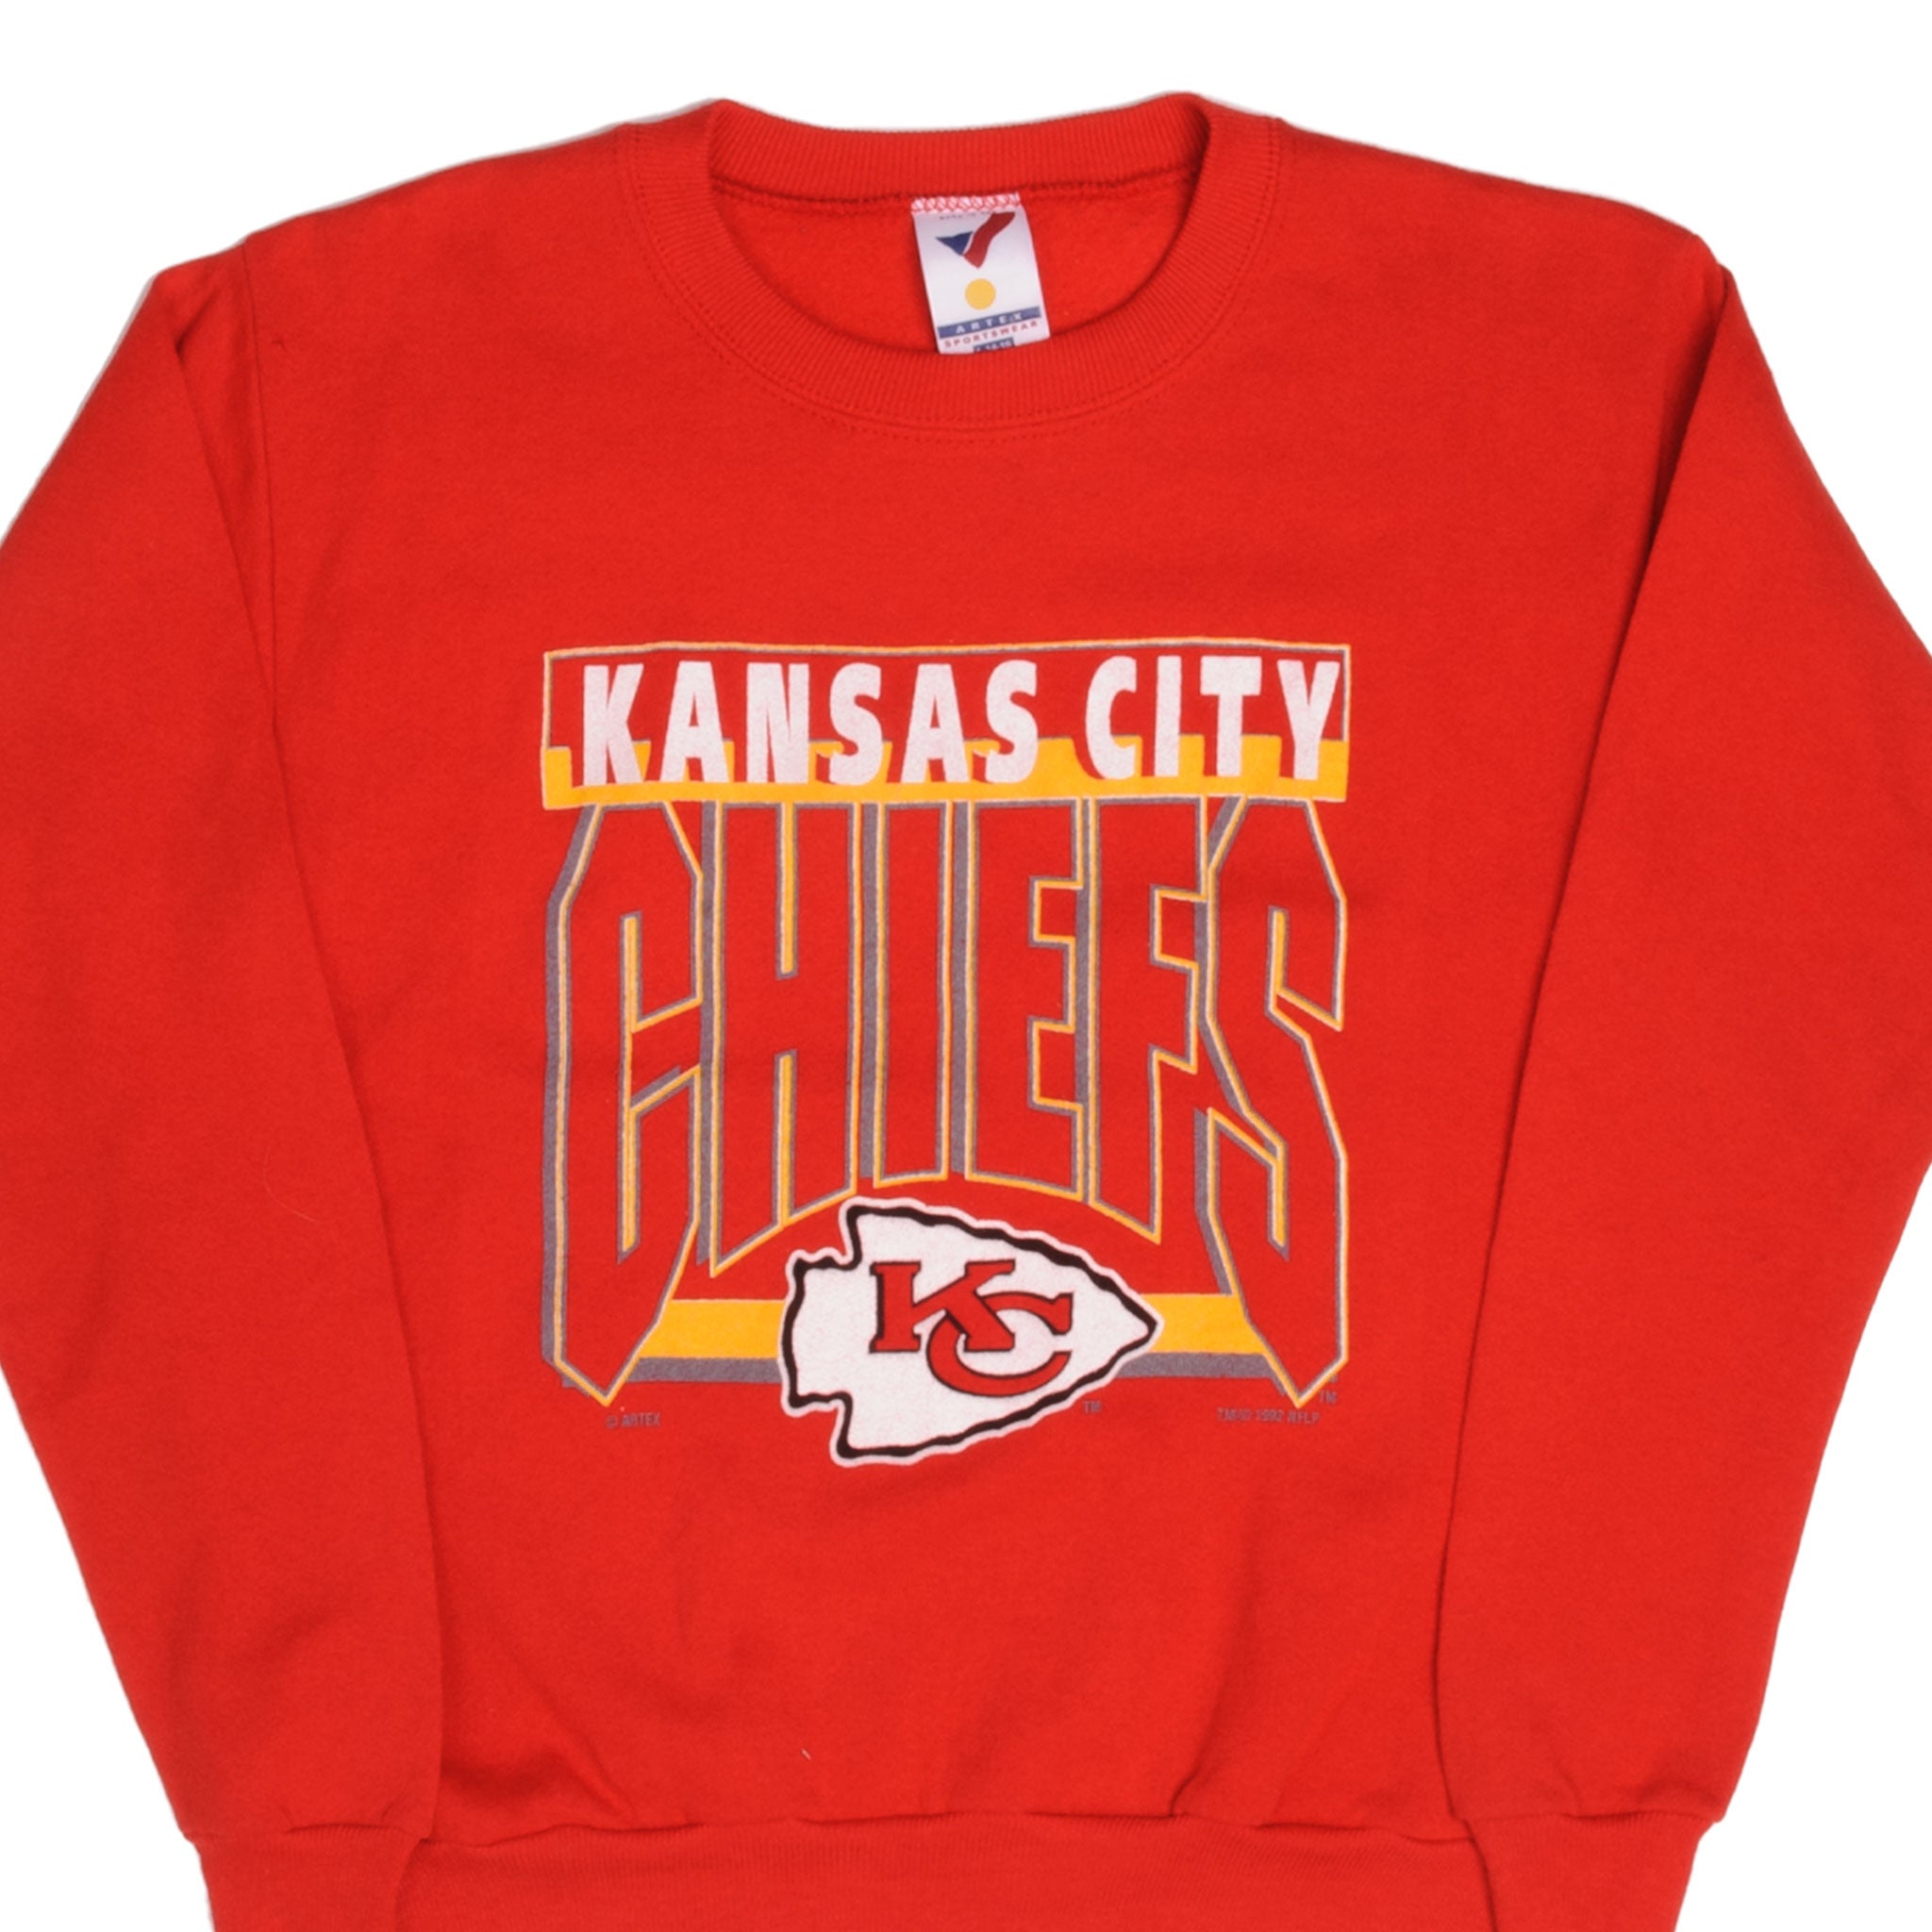 Vintage NFL Kansas City Chiefs Sweatshirt Small 1992 Made in USA